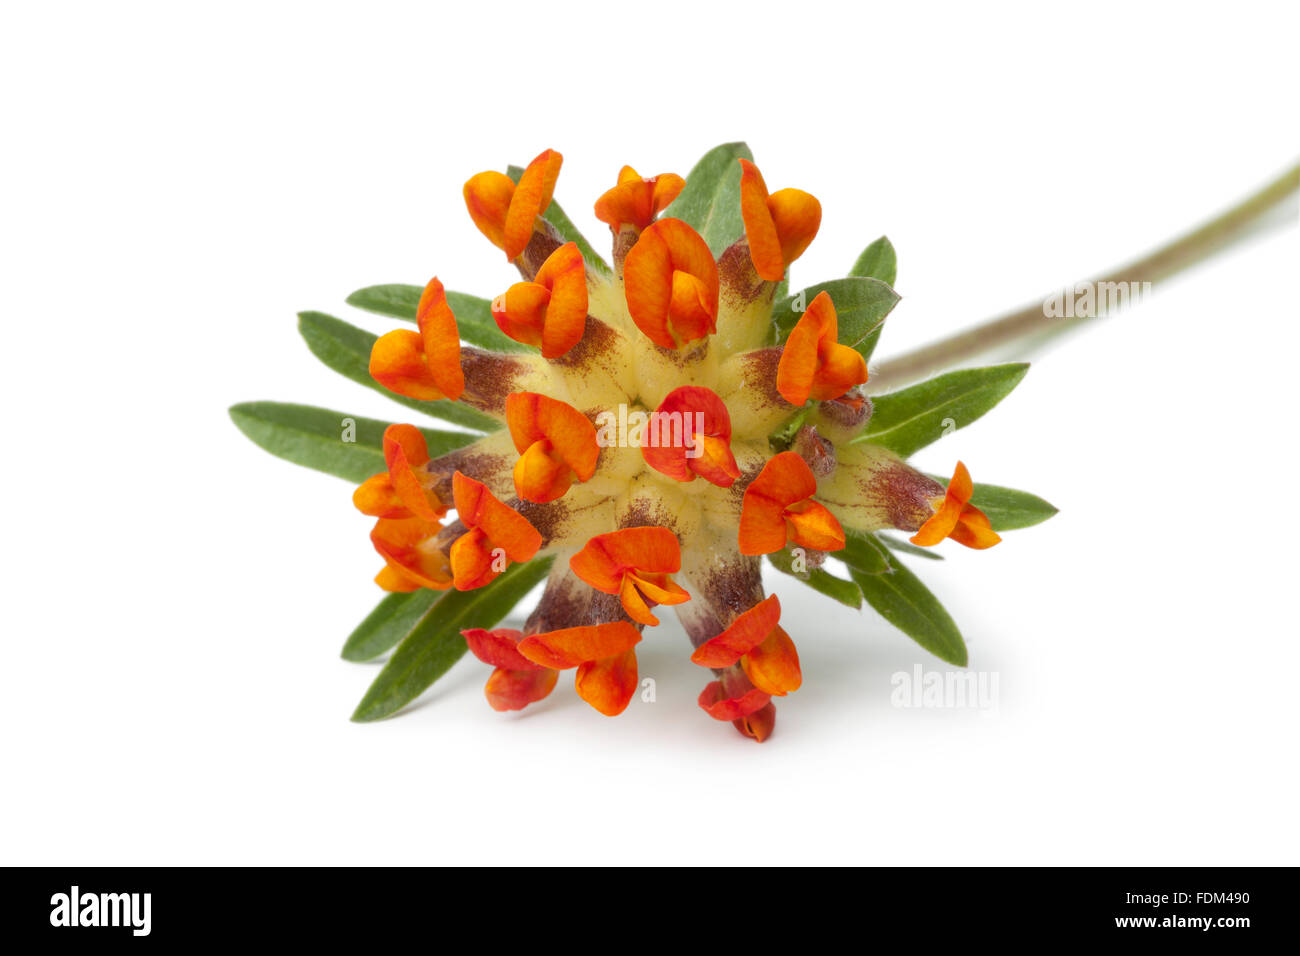 Fresh orange woundwort flower on white background Stock Photo